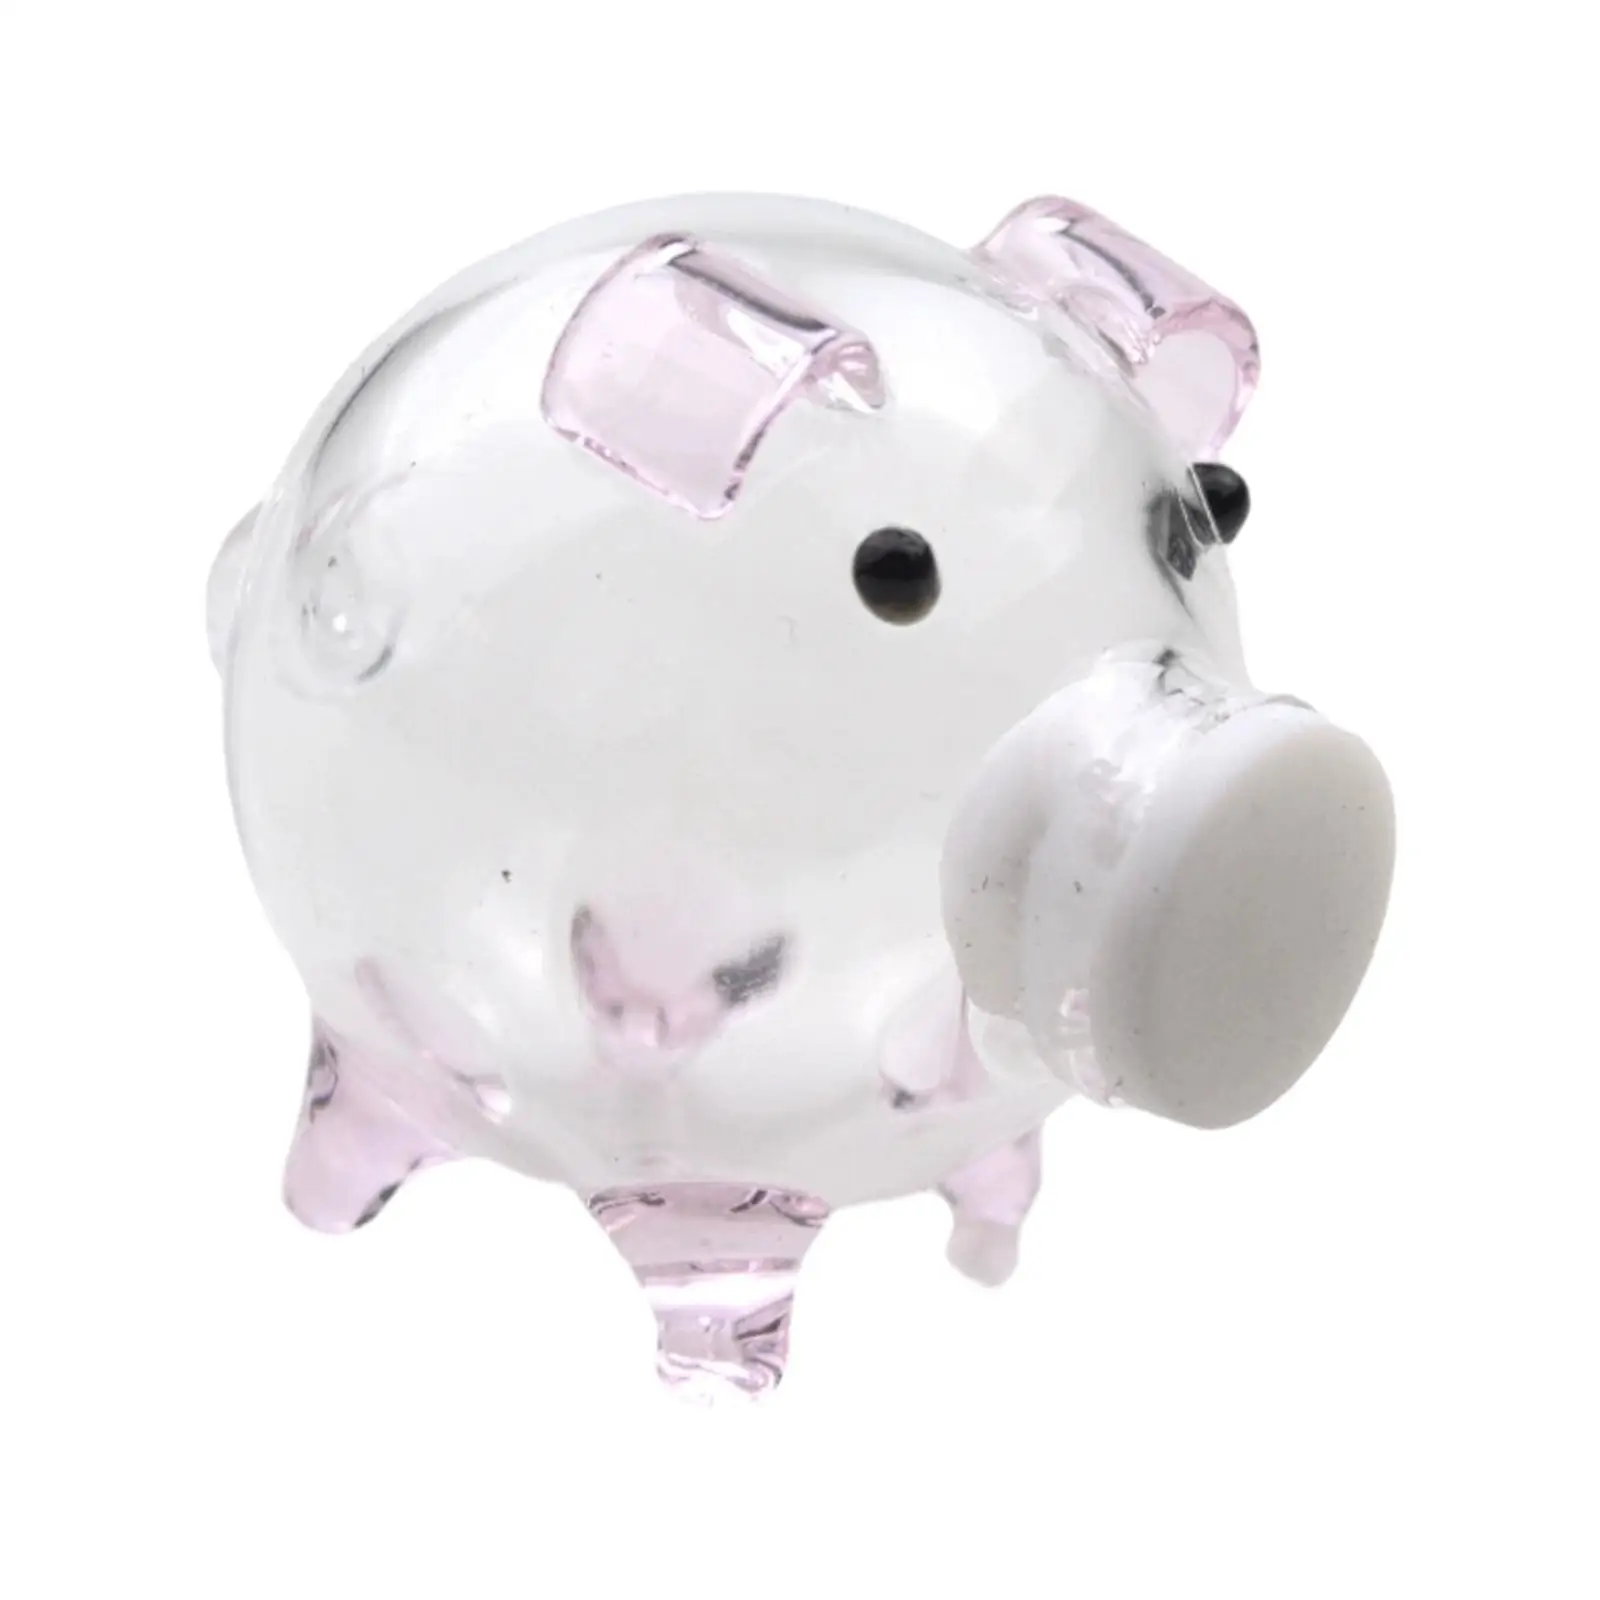 60mmx40mm Glass Piggy Bank Money Bank Lovely Change Box Table Decoration Money Saving Pot for Children Birthday Gift Practical